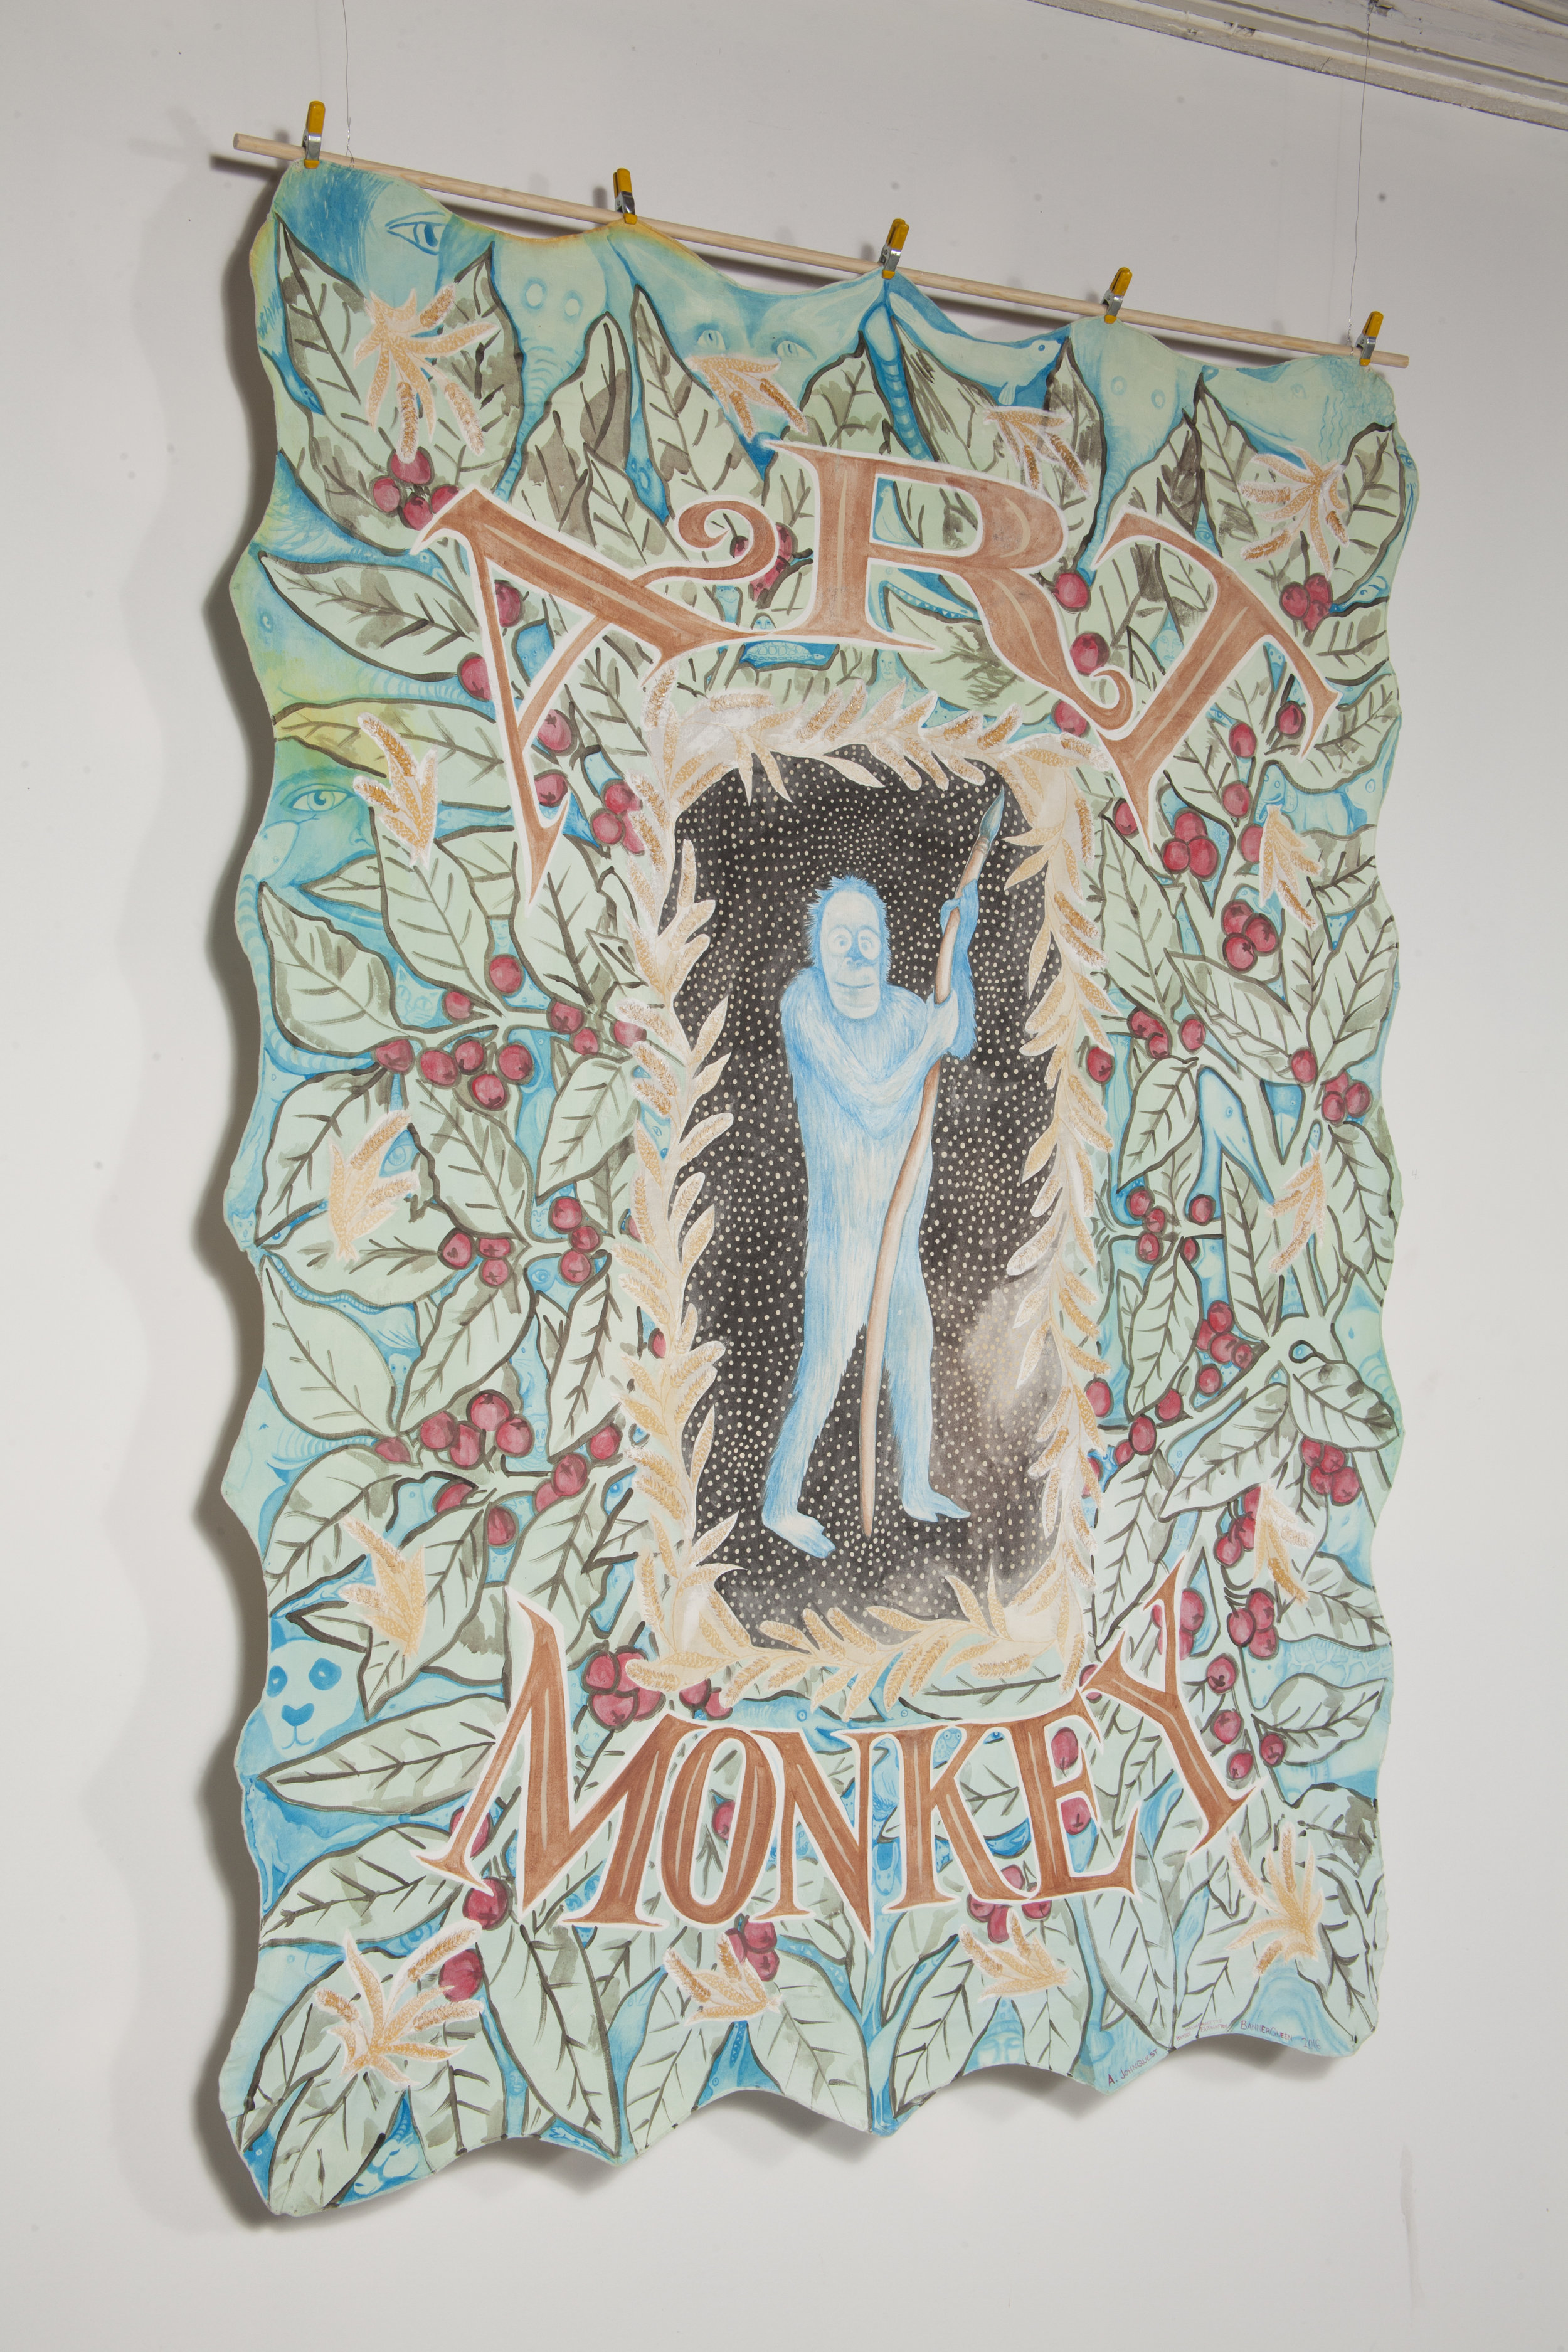  Amy Johnquest | Art Monkey | 2016 | Casien &amp; acrylic on vintage tablecloth 